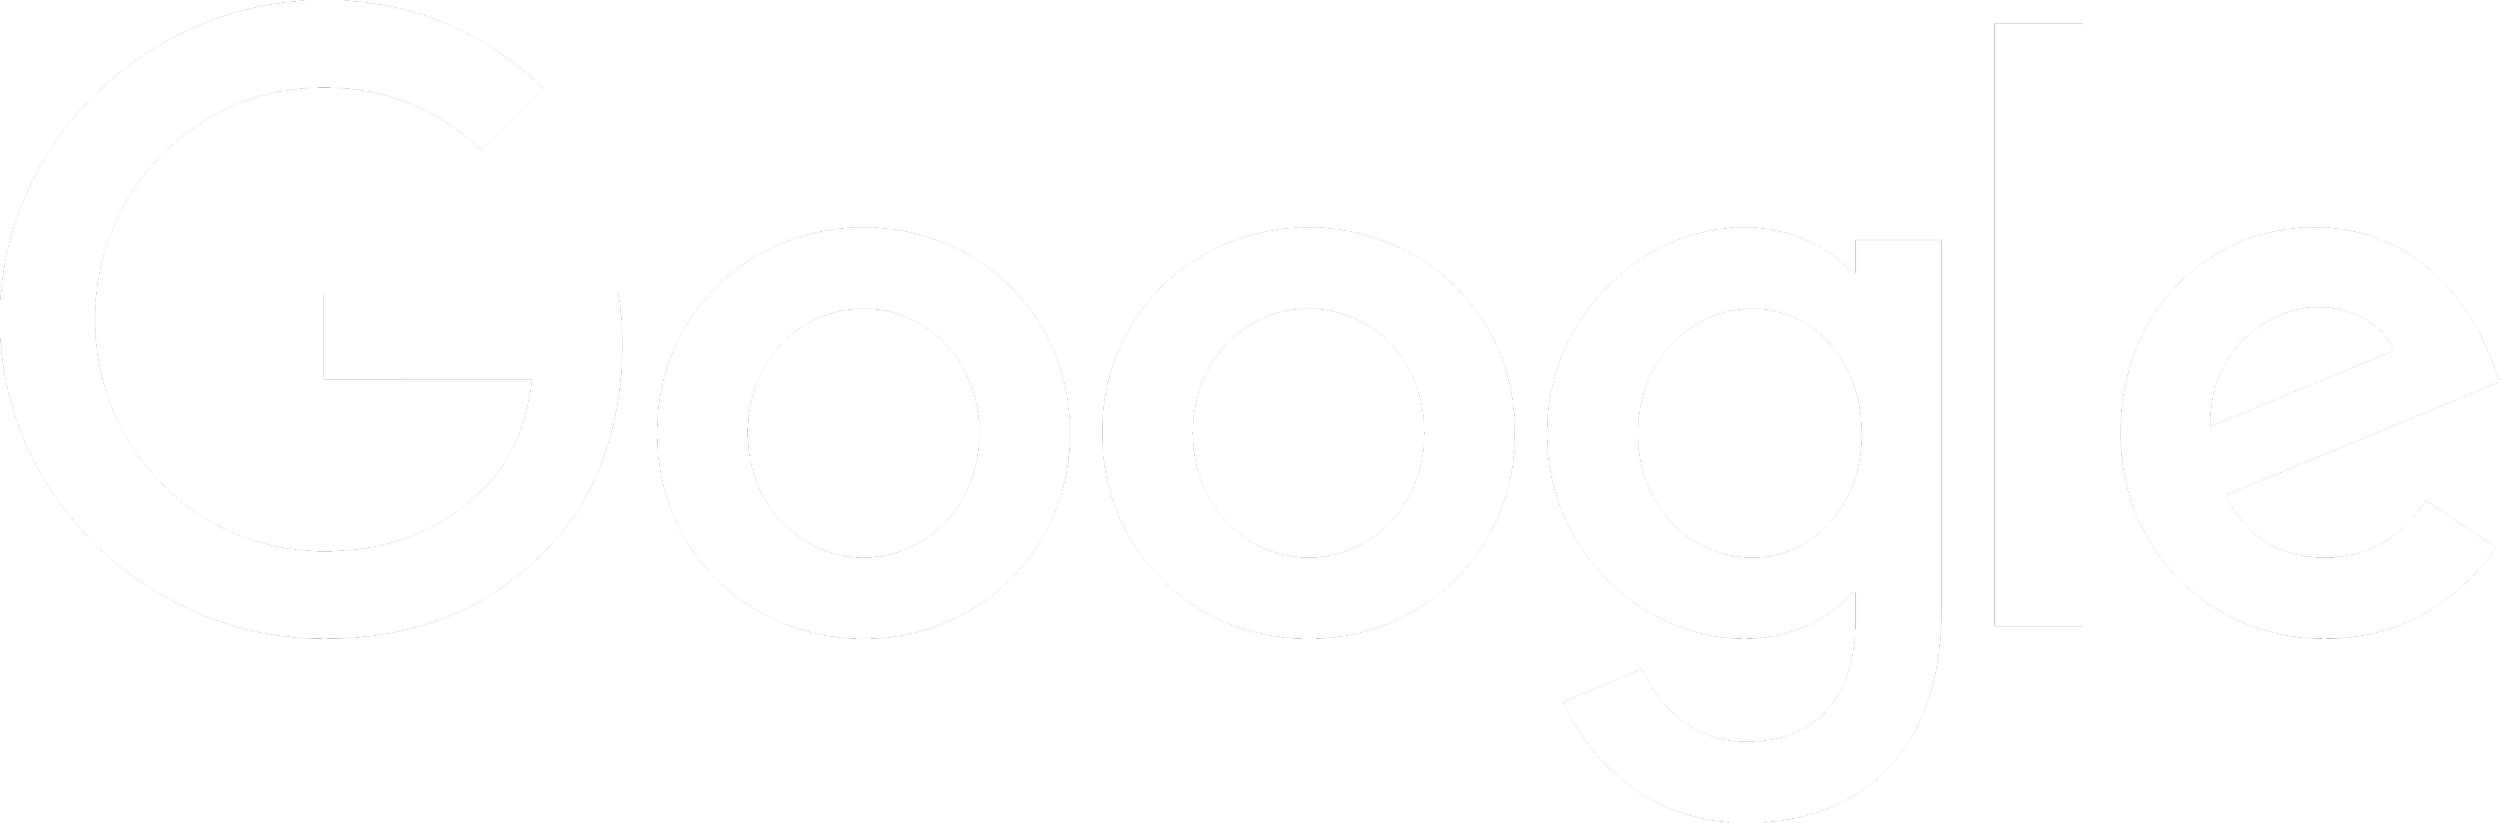 google-white-logo.png